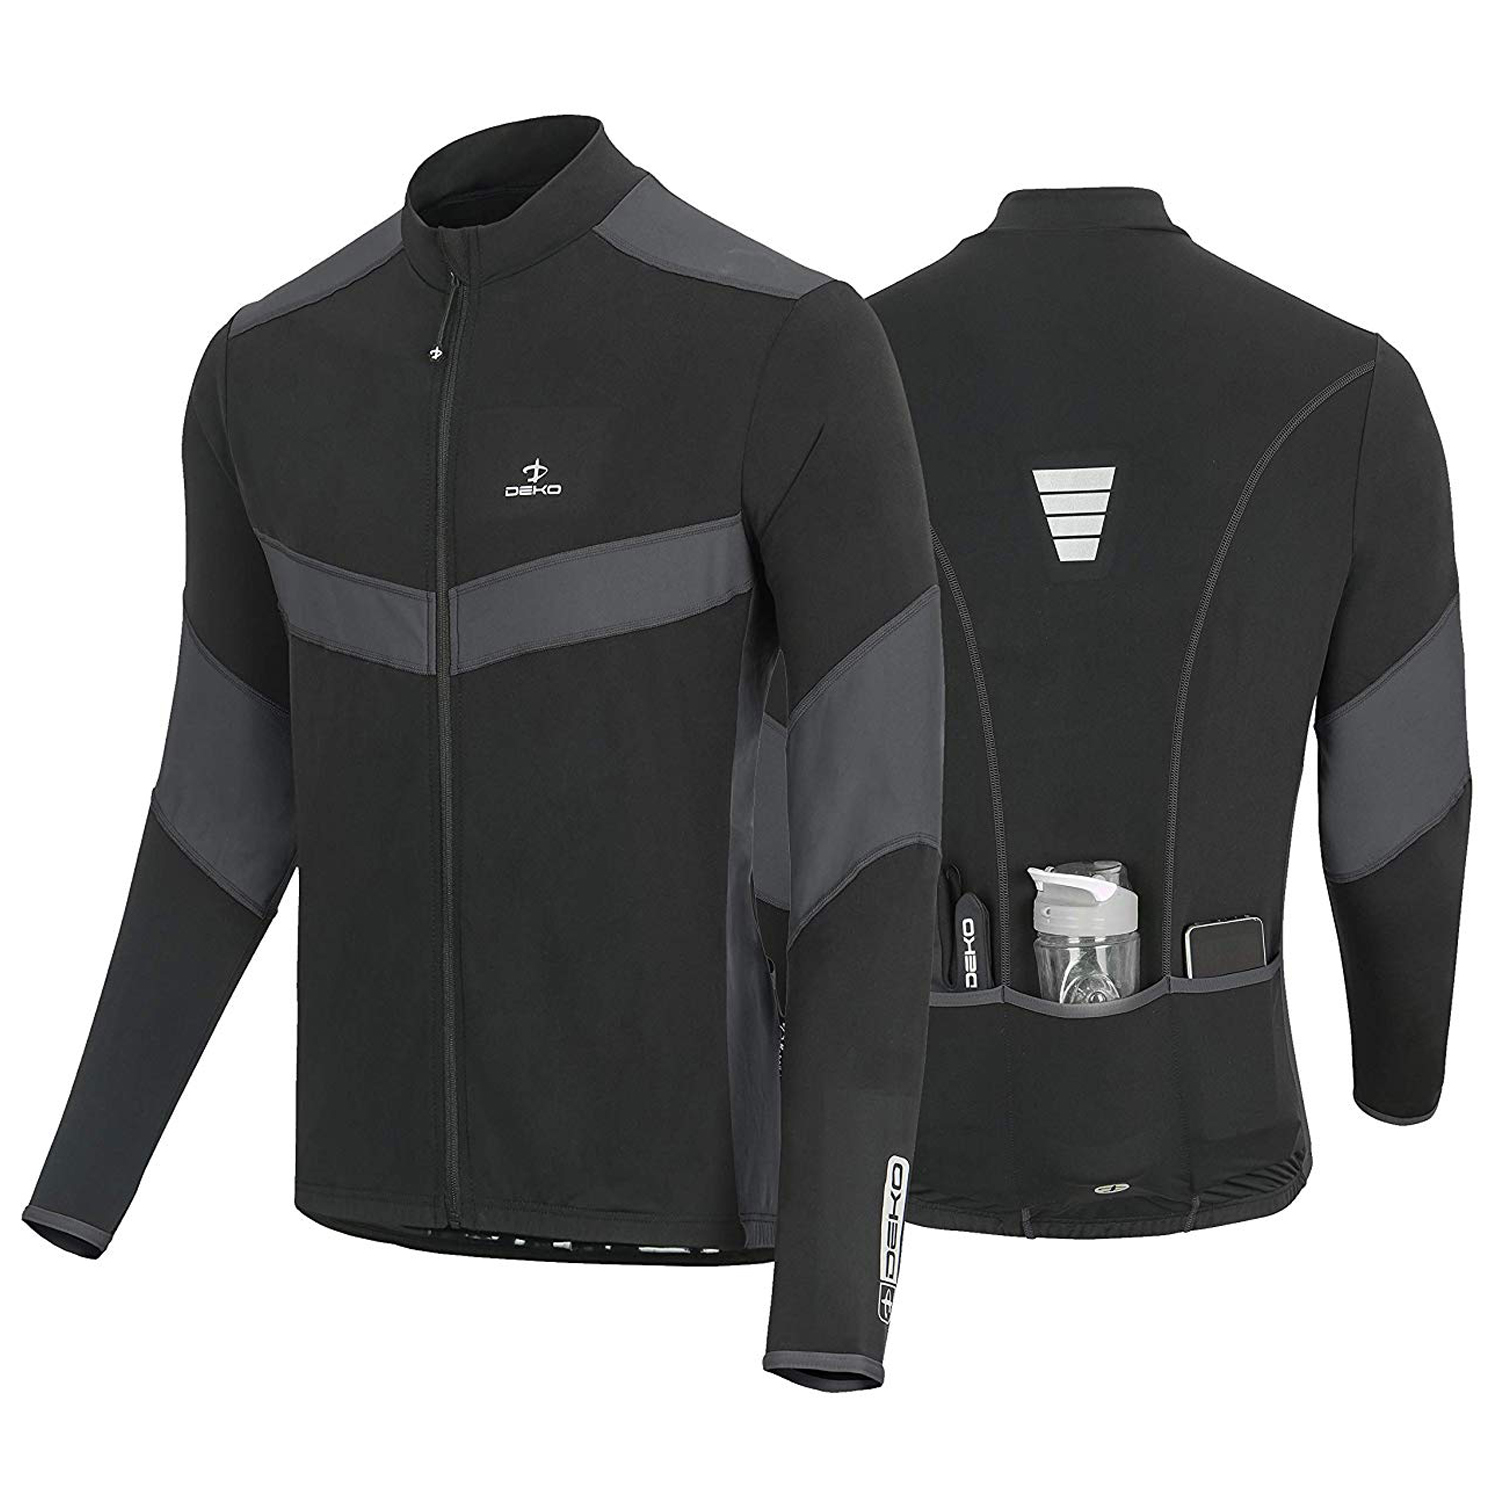 Winter Cycling Suit Grey/Black | Cycling Garments: Deko Sports UK®